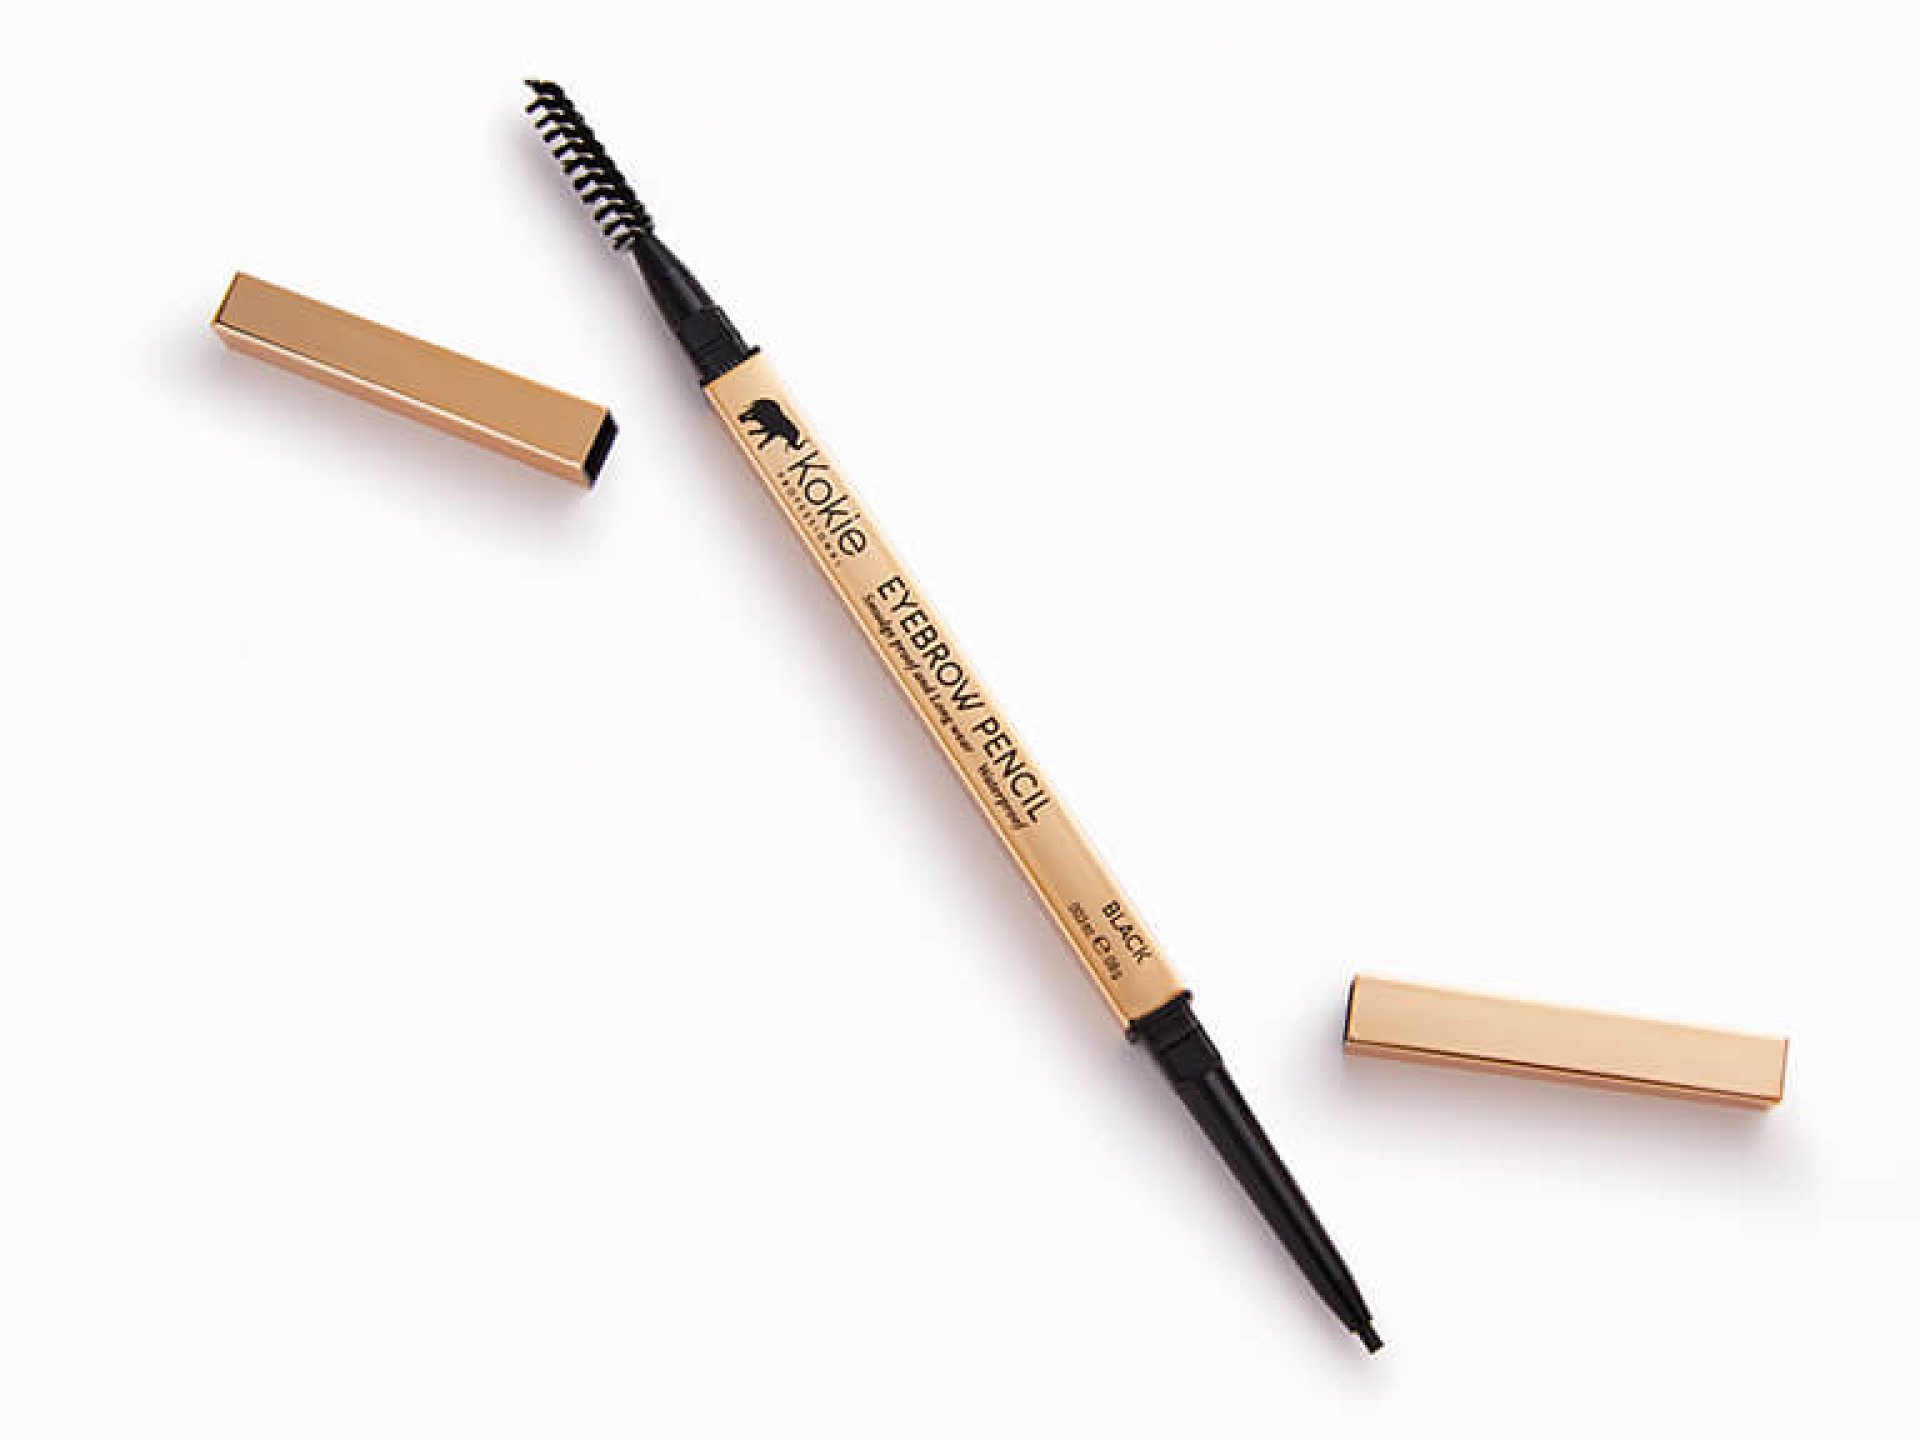 KOKIE PROFESSIONAL Brow Pencil in Black